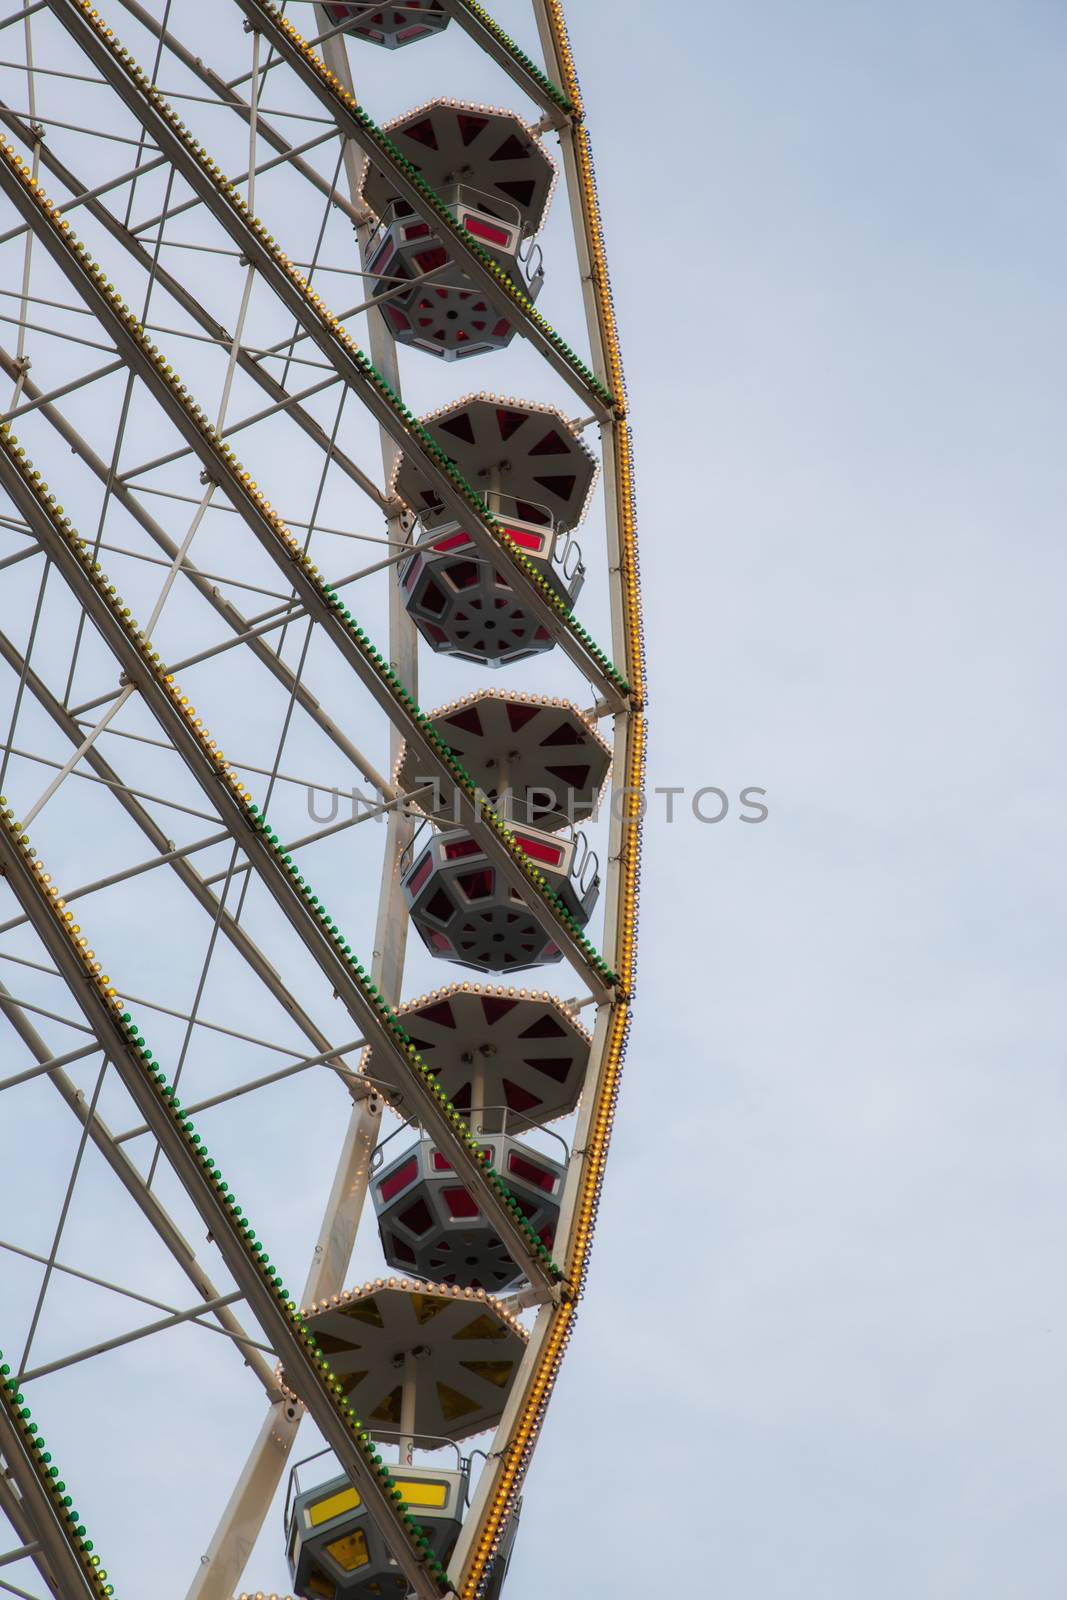 Ferris wheel in front of a blue sky by sandra_fotodesign